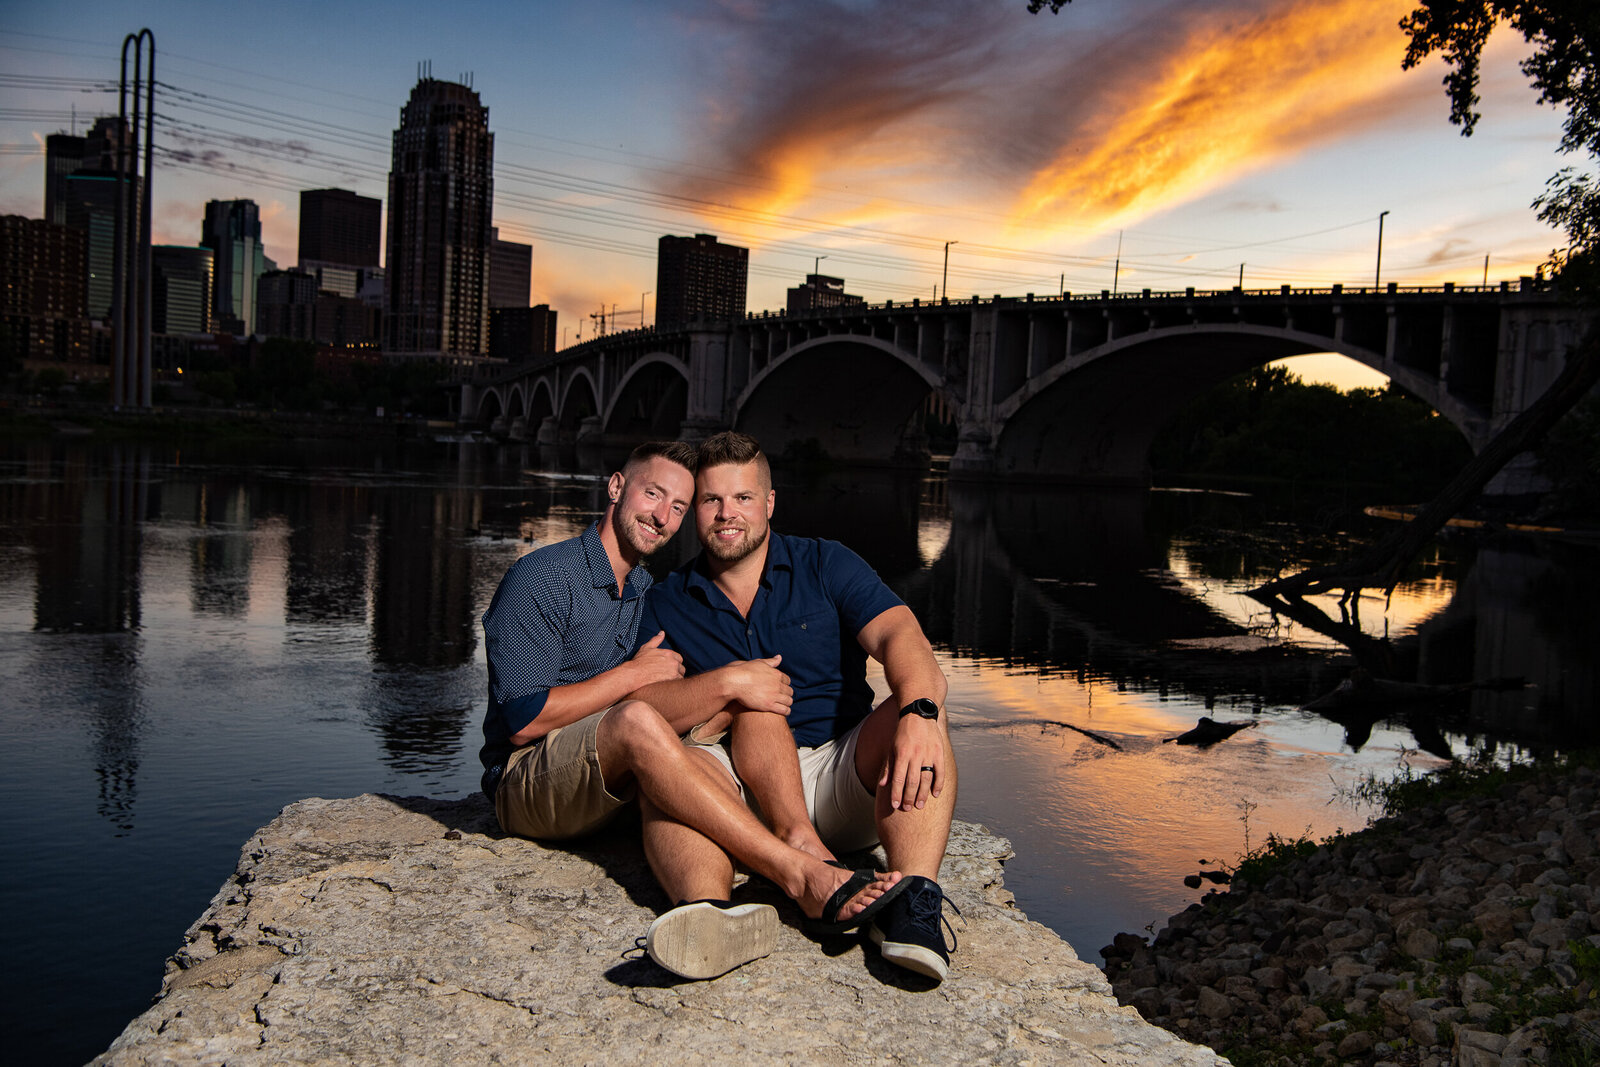 Minnesota Engagement Photography - LGBTQ Friendly - Dog Friendly - RKH Images (6 of 27)